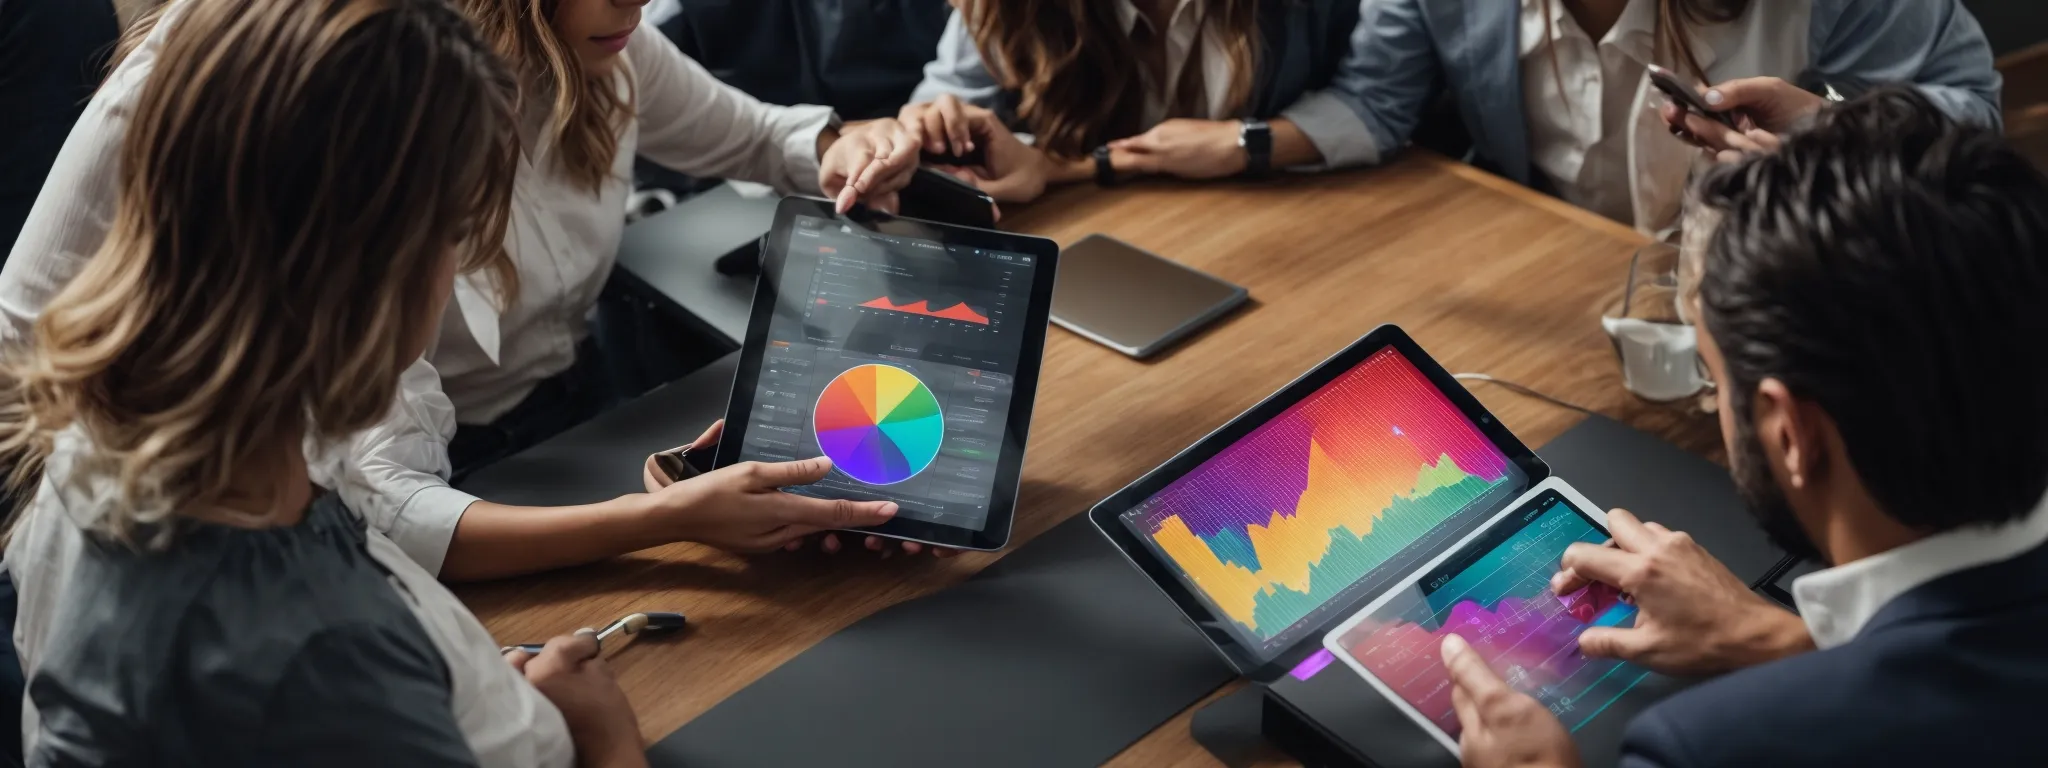 a team of professionals enthusiastically brainstorm around a digital tablet showcasing colorful graphs, symbolizing innovative digital marketing strategy development.